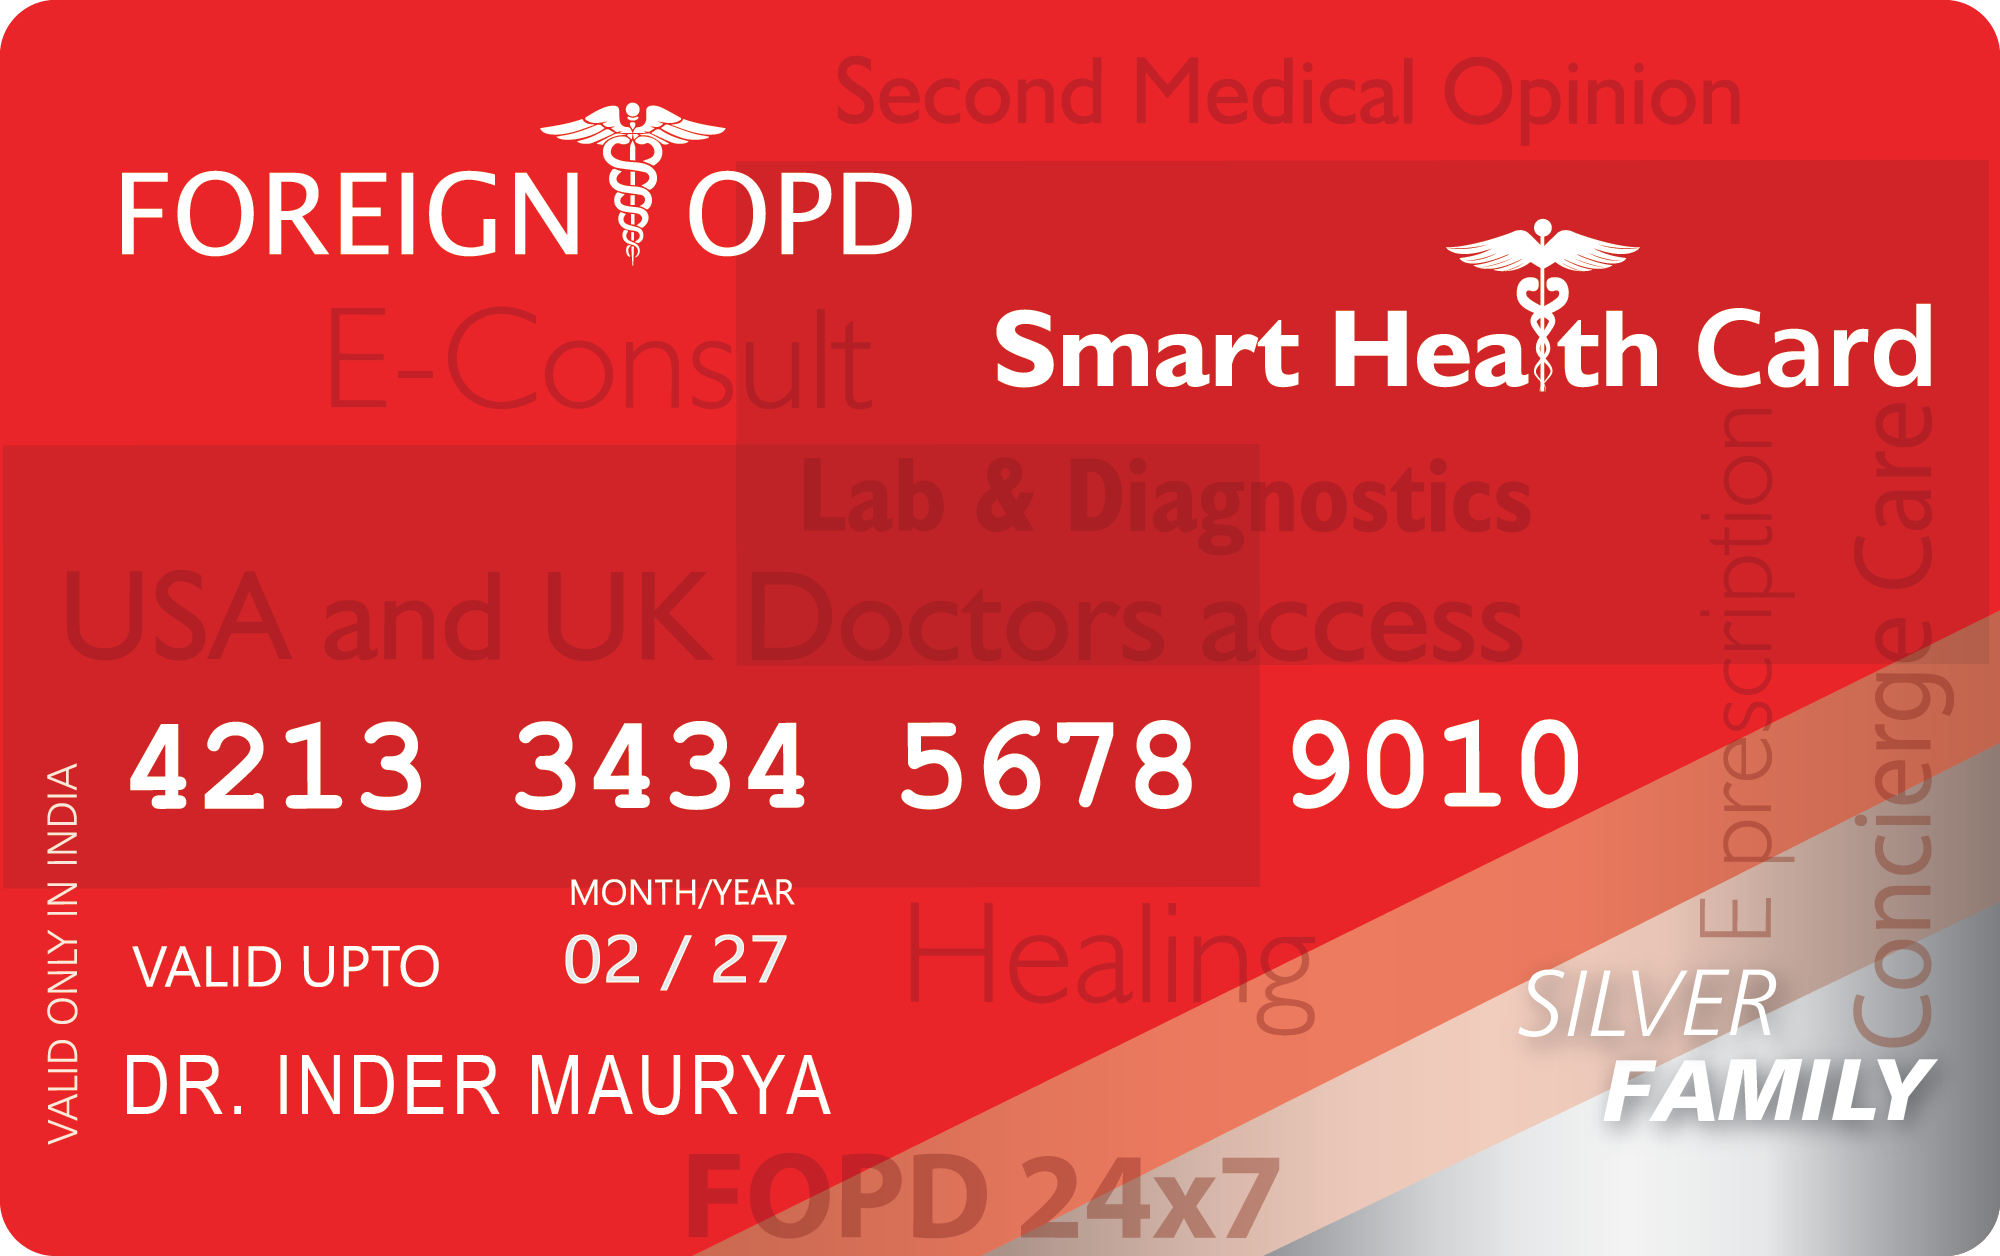 FOPD Smart Health cards